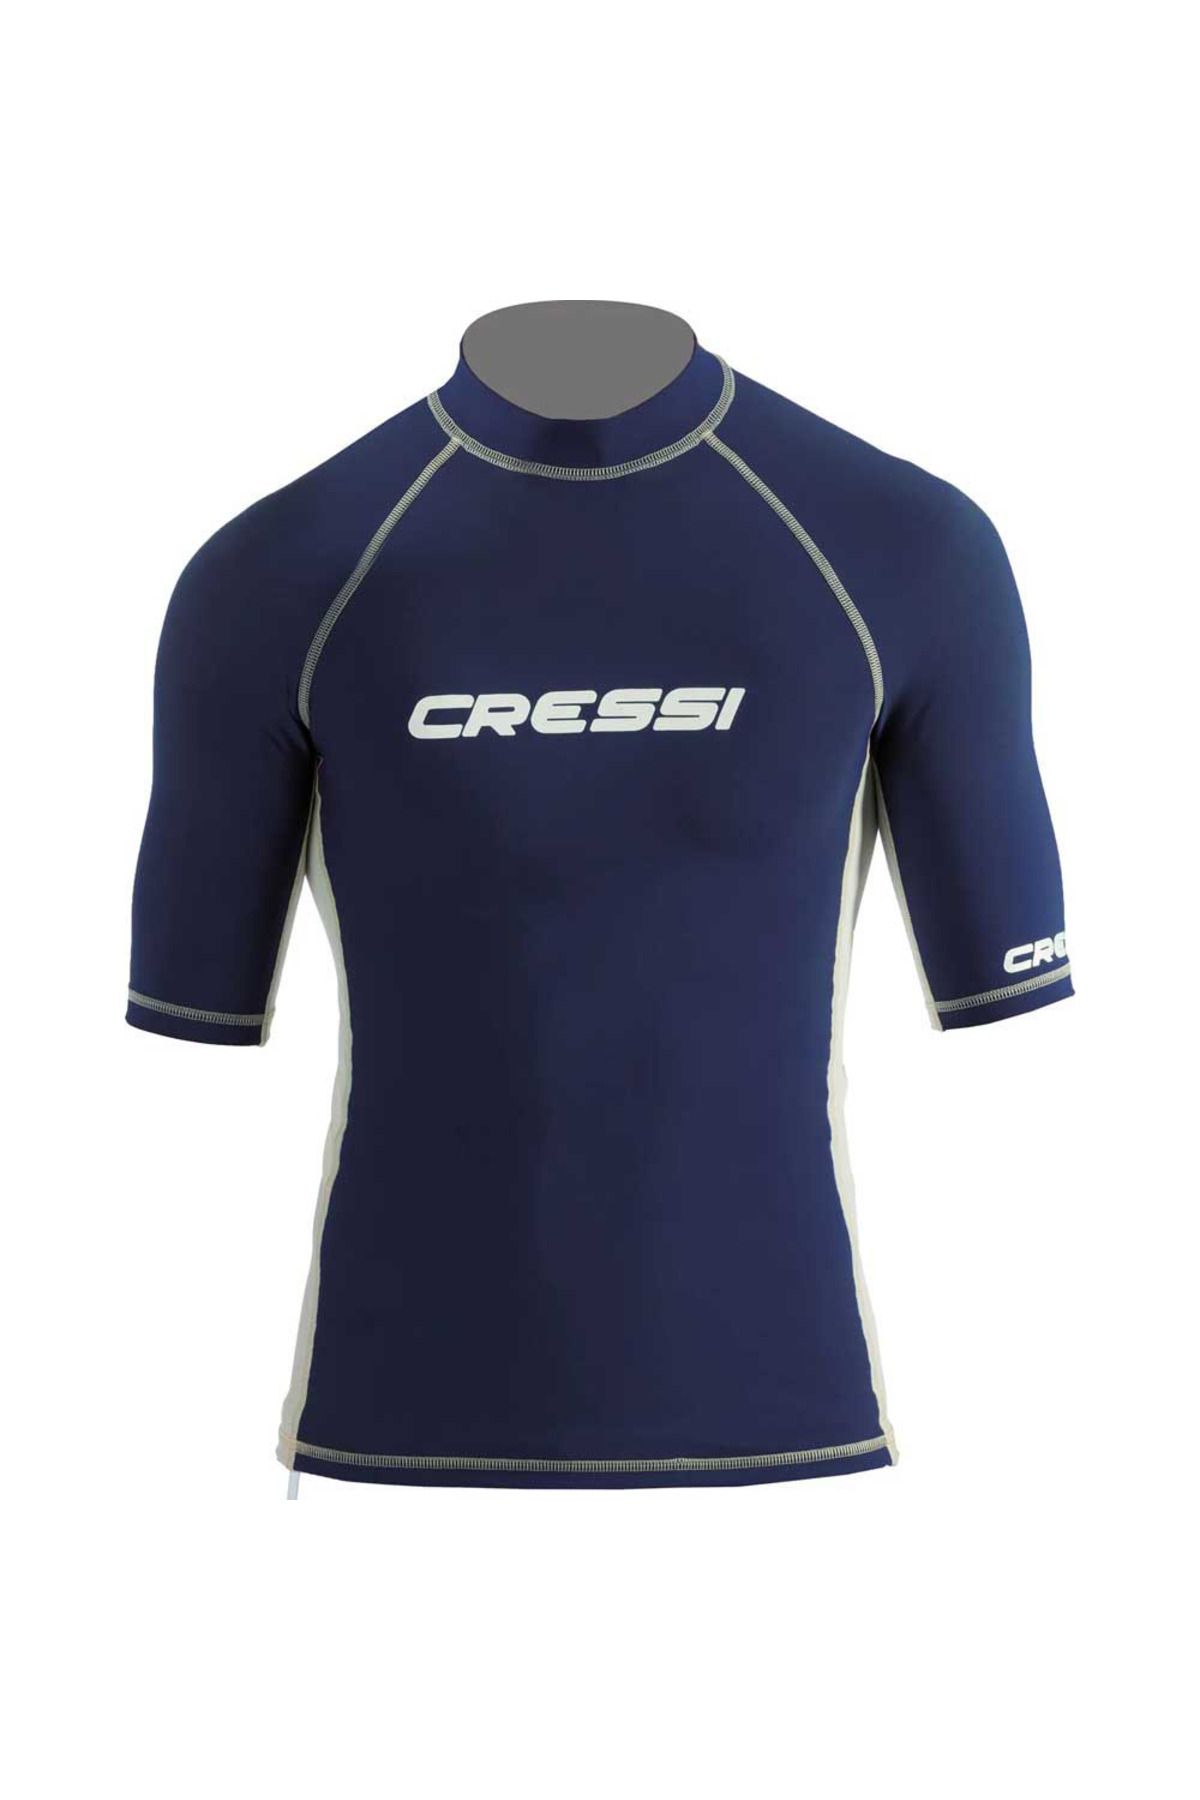 cressi sub Rash Guard Man T-shirt Dark Blue 3xl - No:7